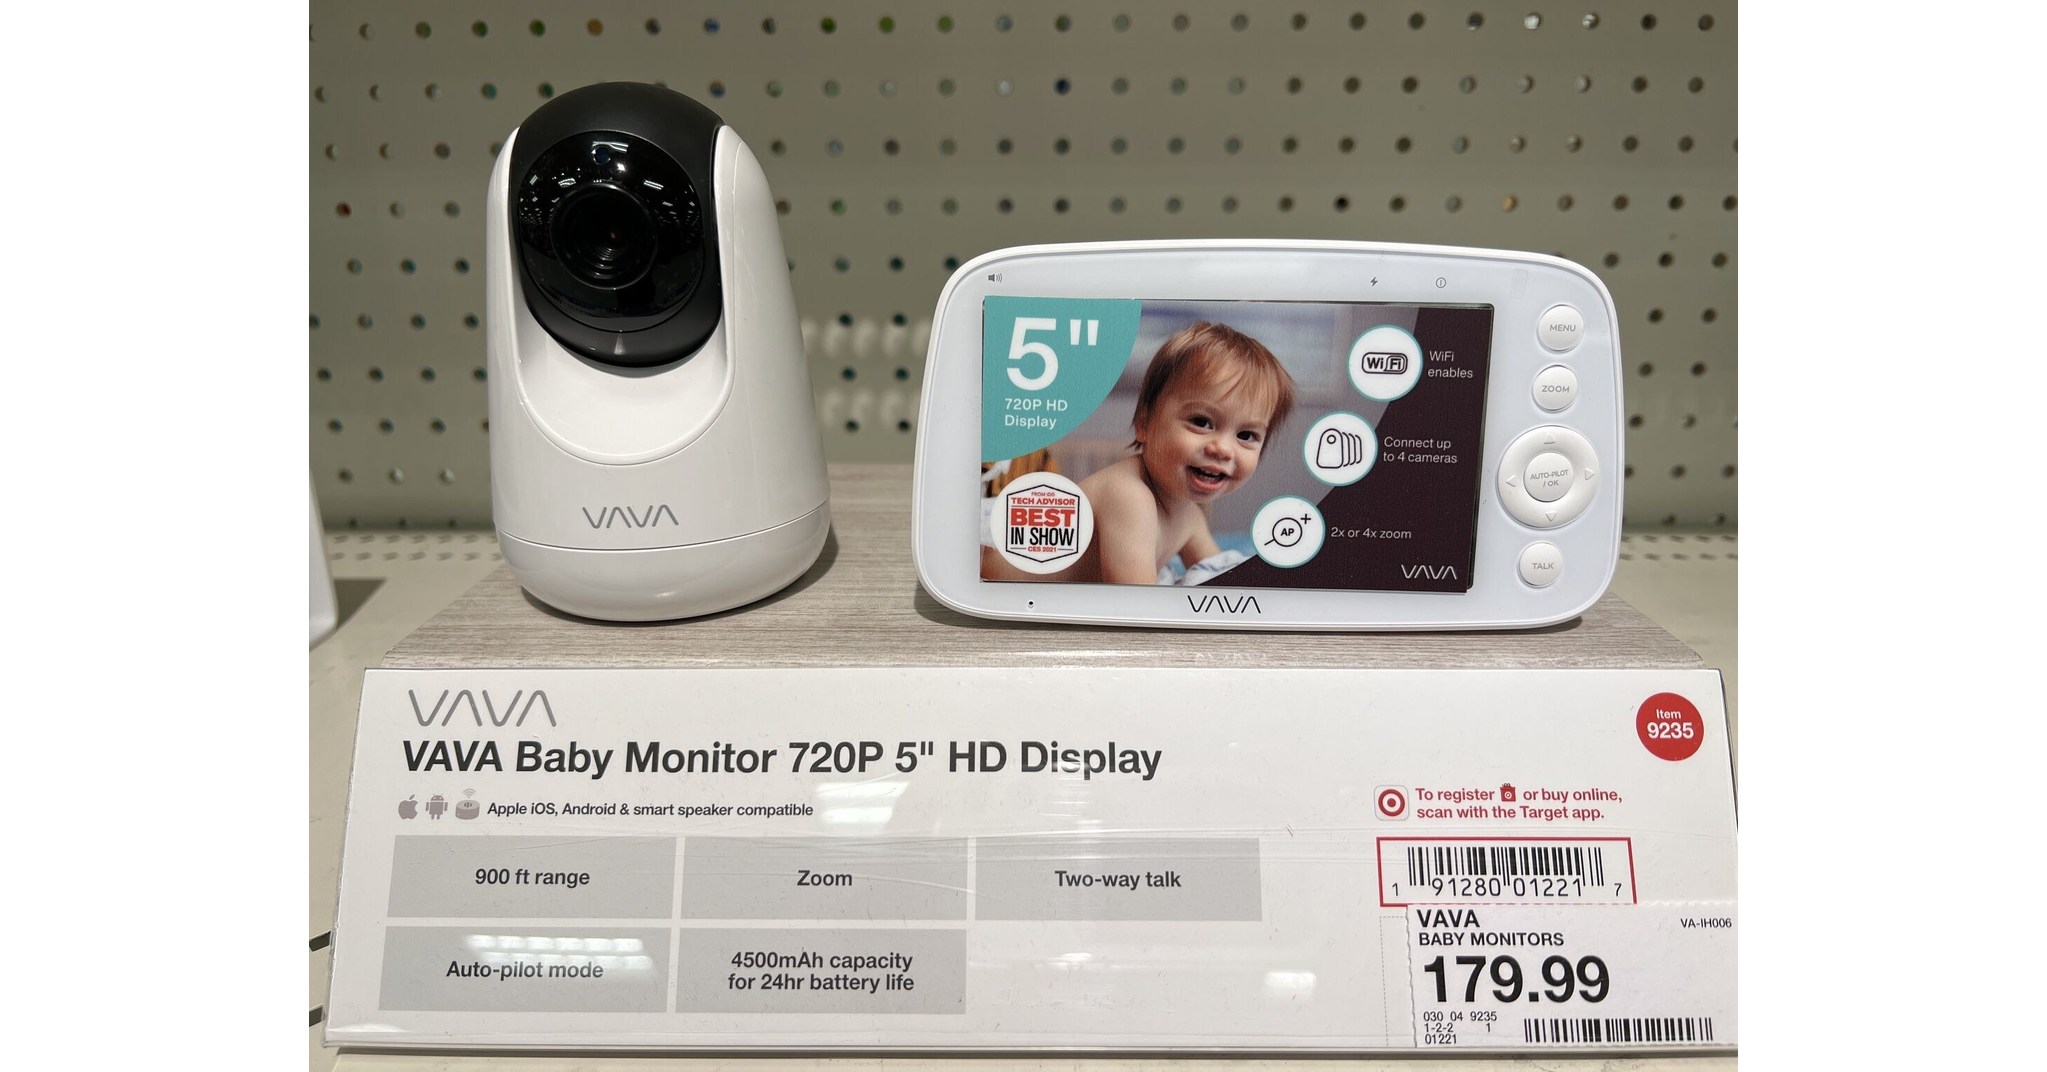 Vava Pink 720p Video Baby Monitor